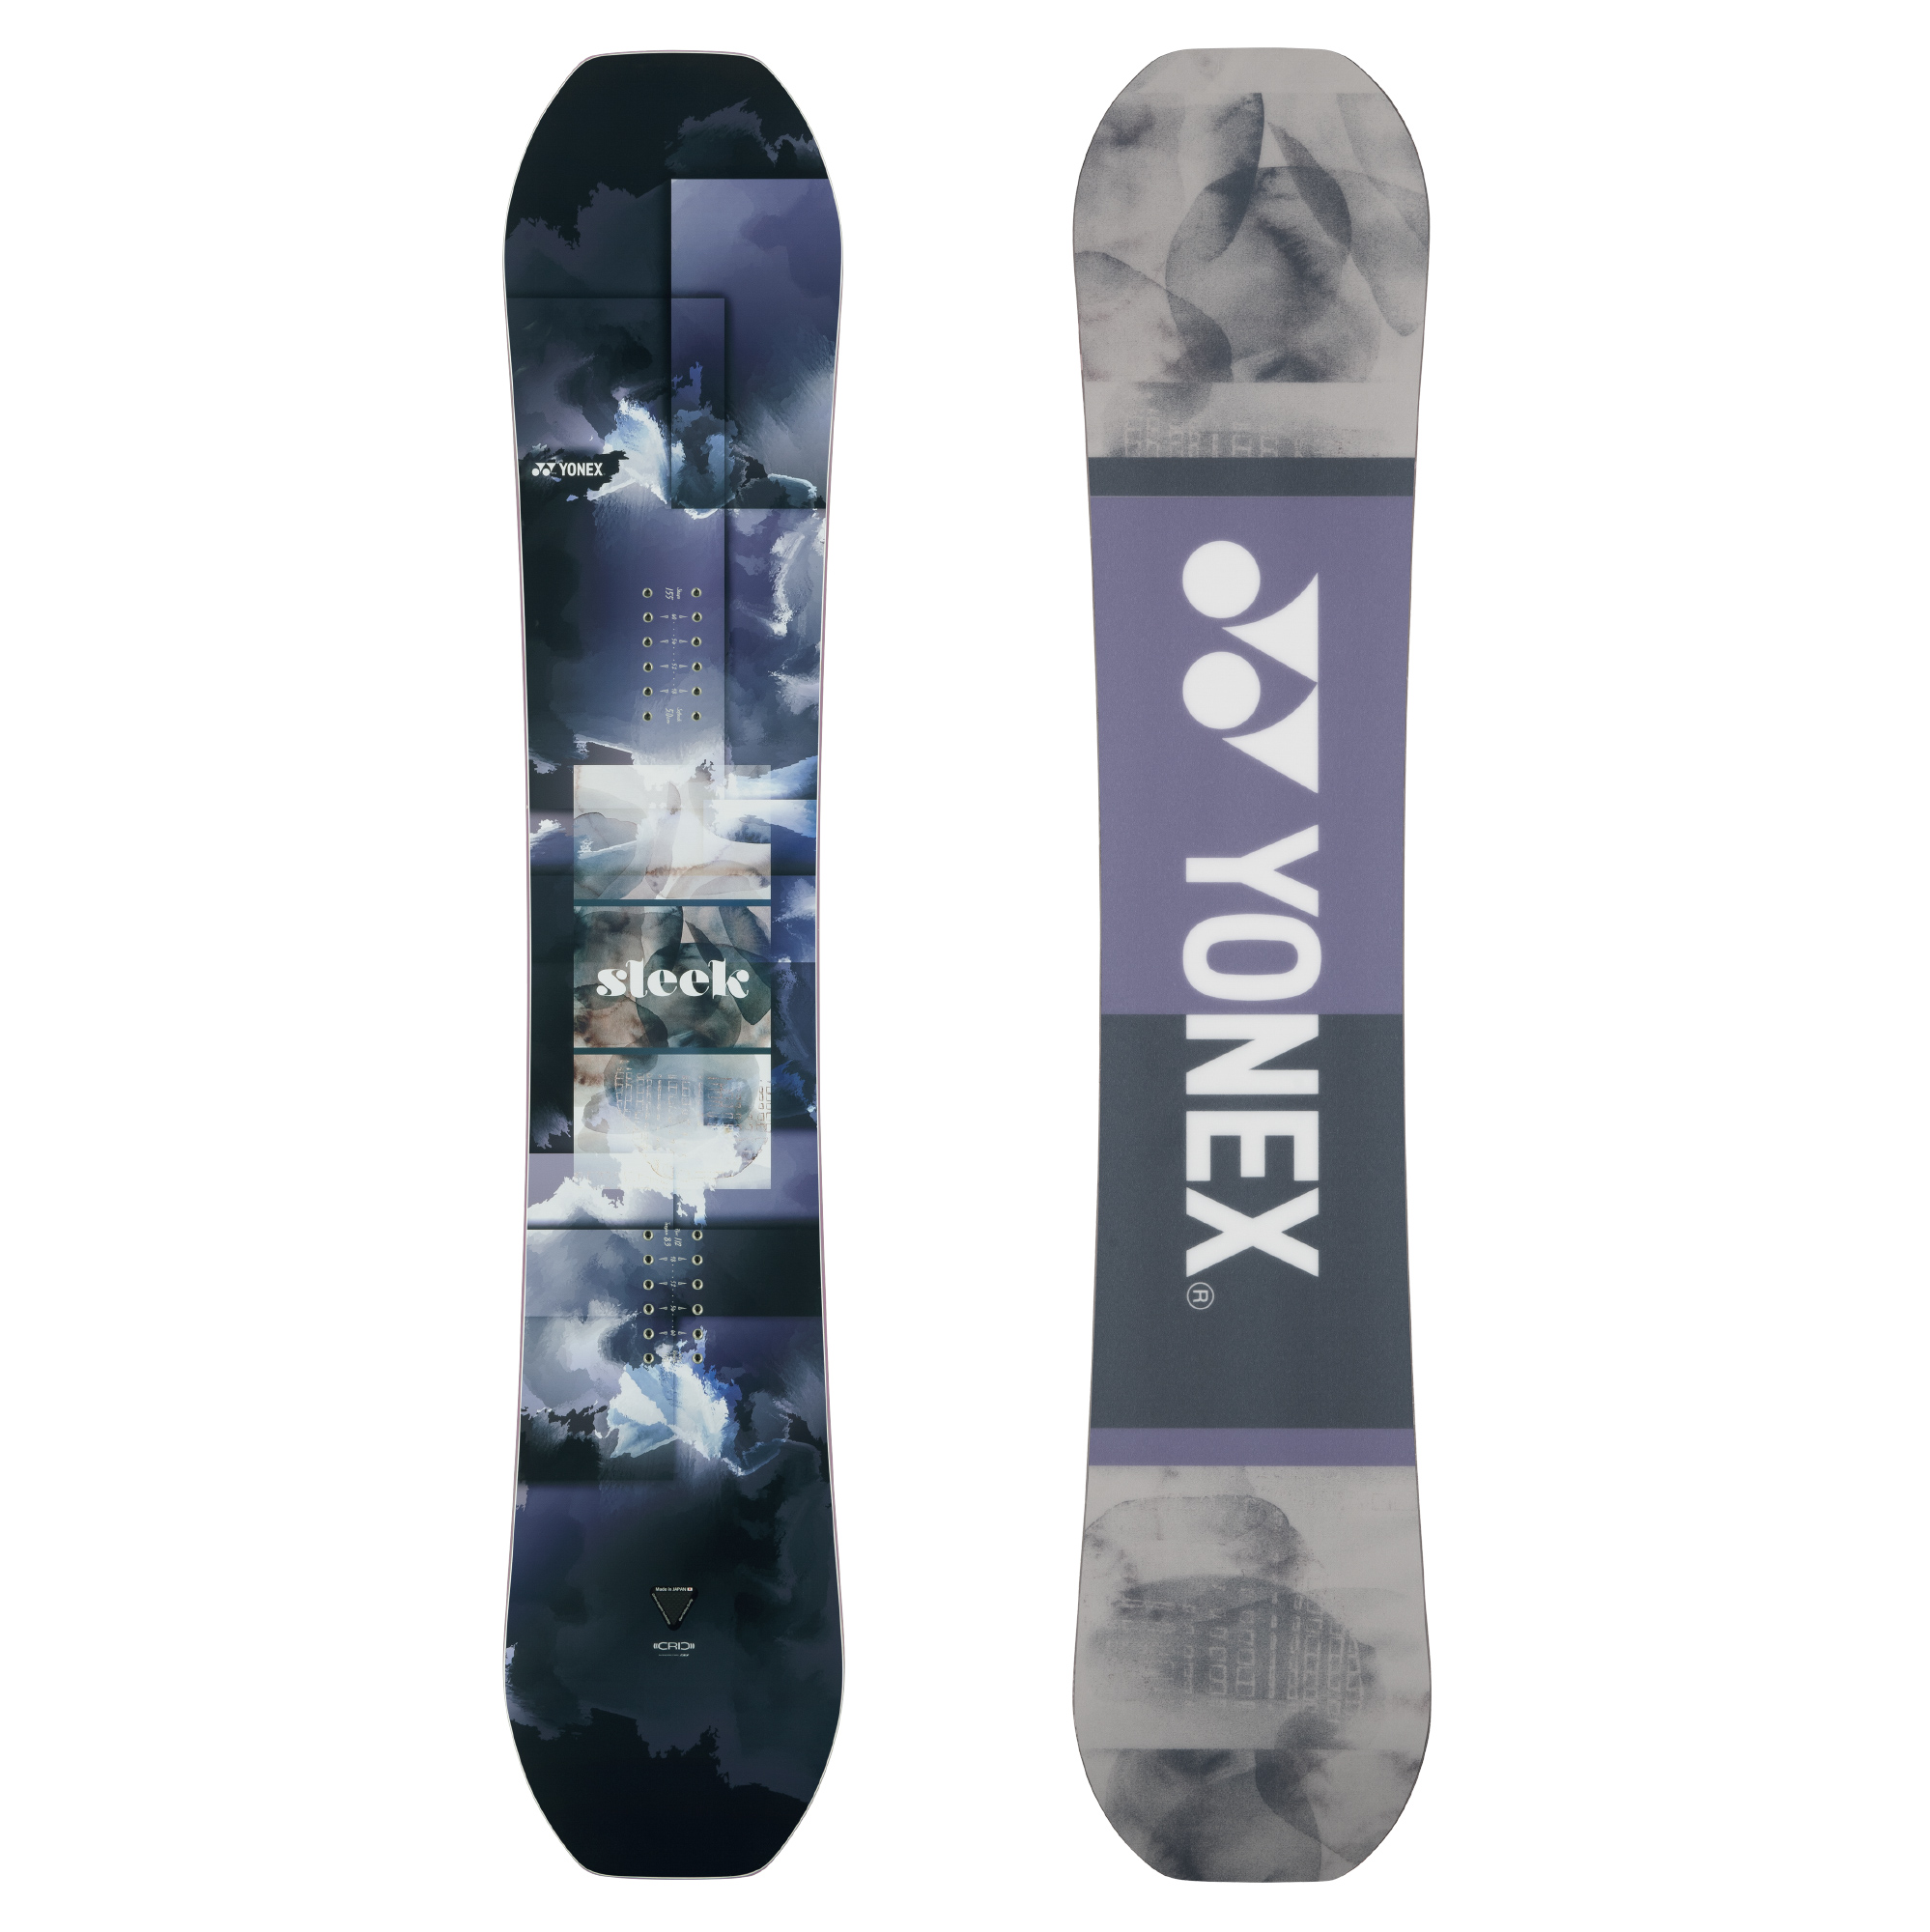 SLEEK | YONEX SNOWBOARDS ヨネックススノーボード